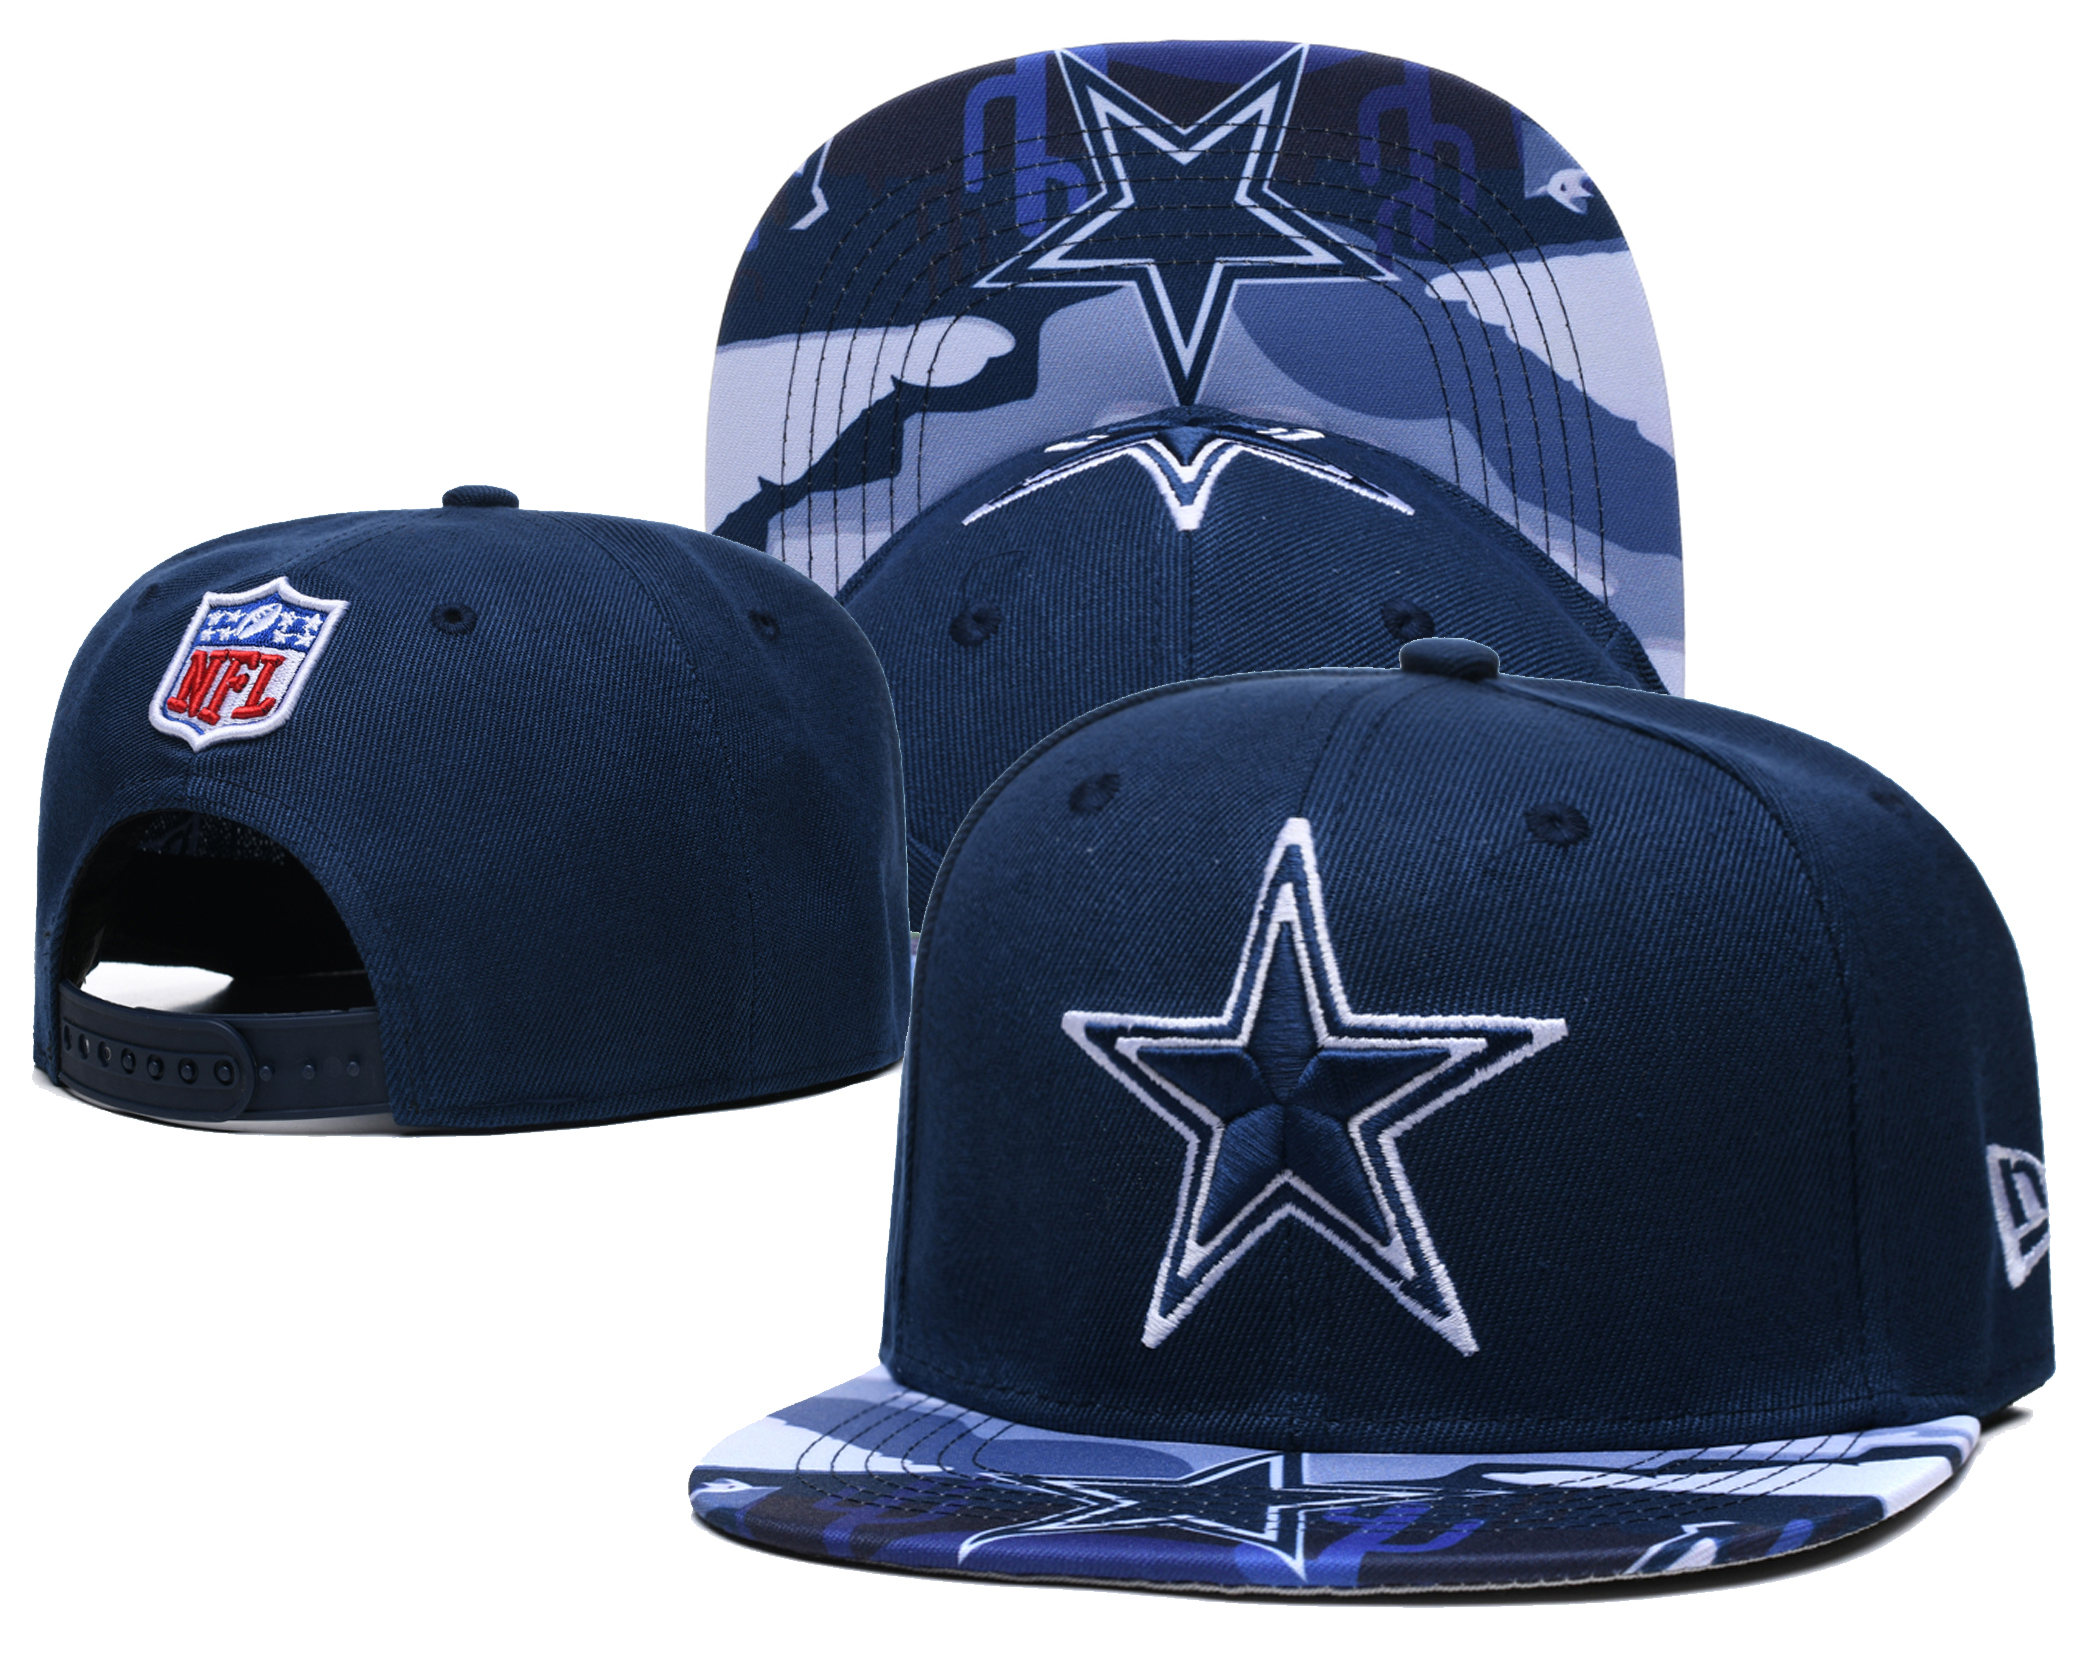 Cowboys Team Logo Navy Adjustable Hat LH